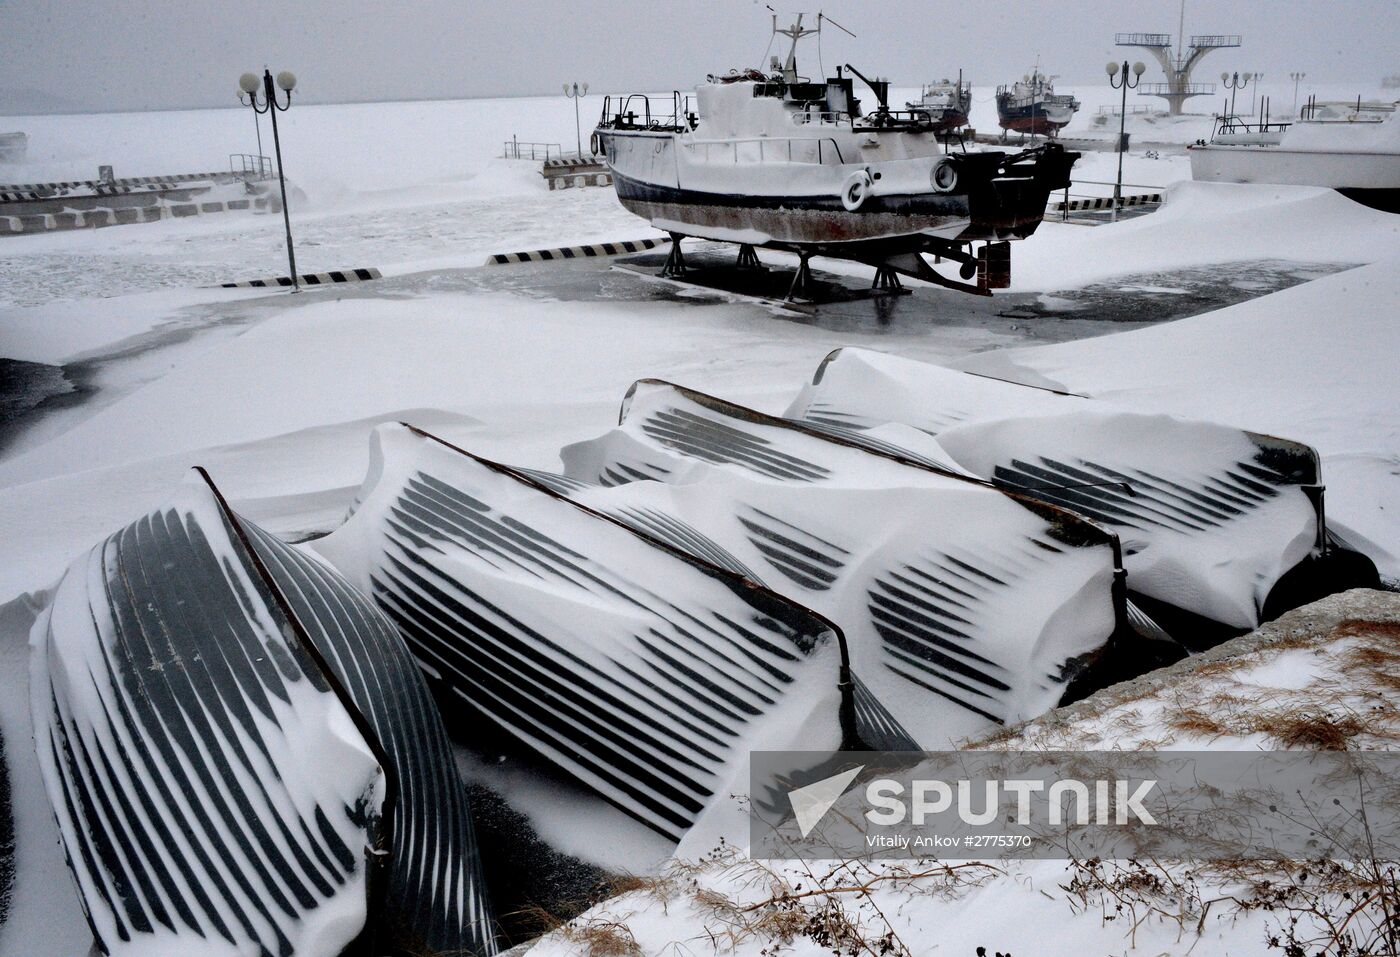 Aftermath of a snowstorm in Vladivostok